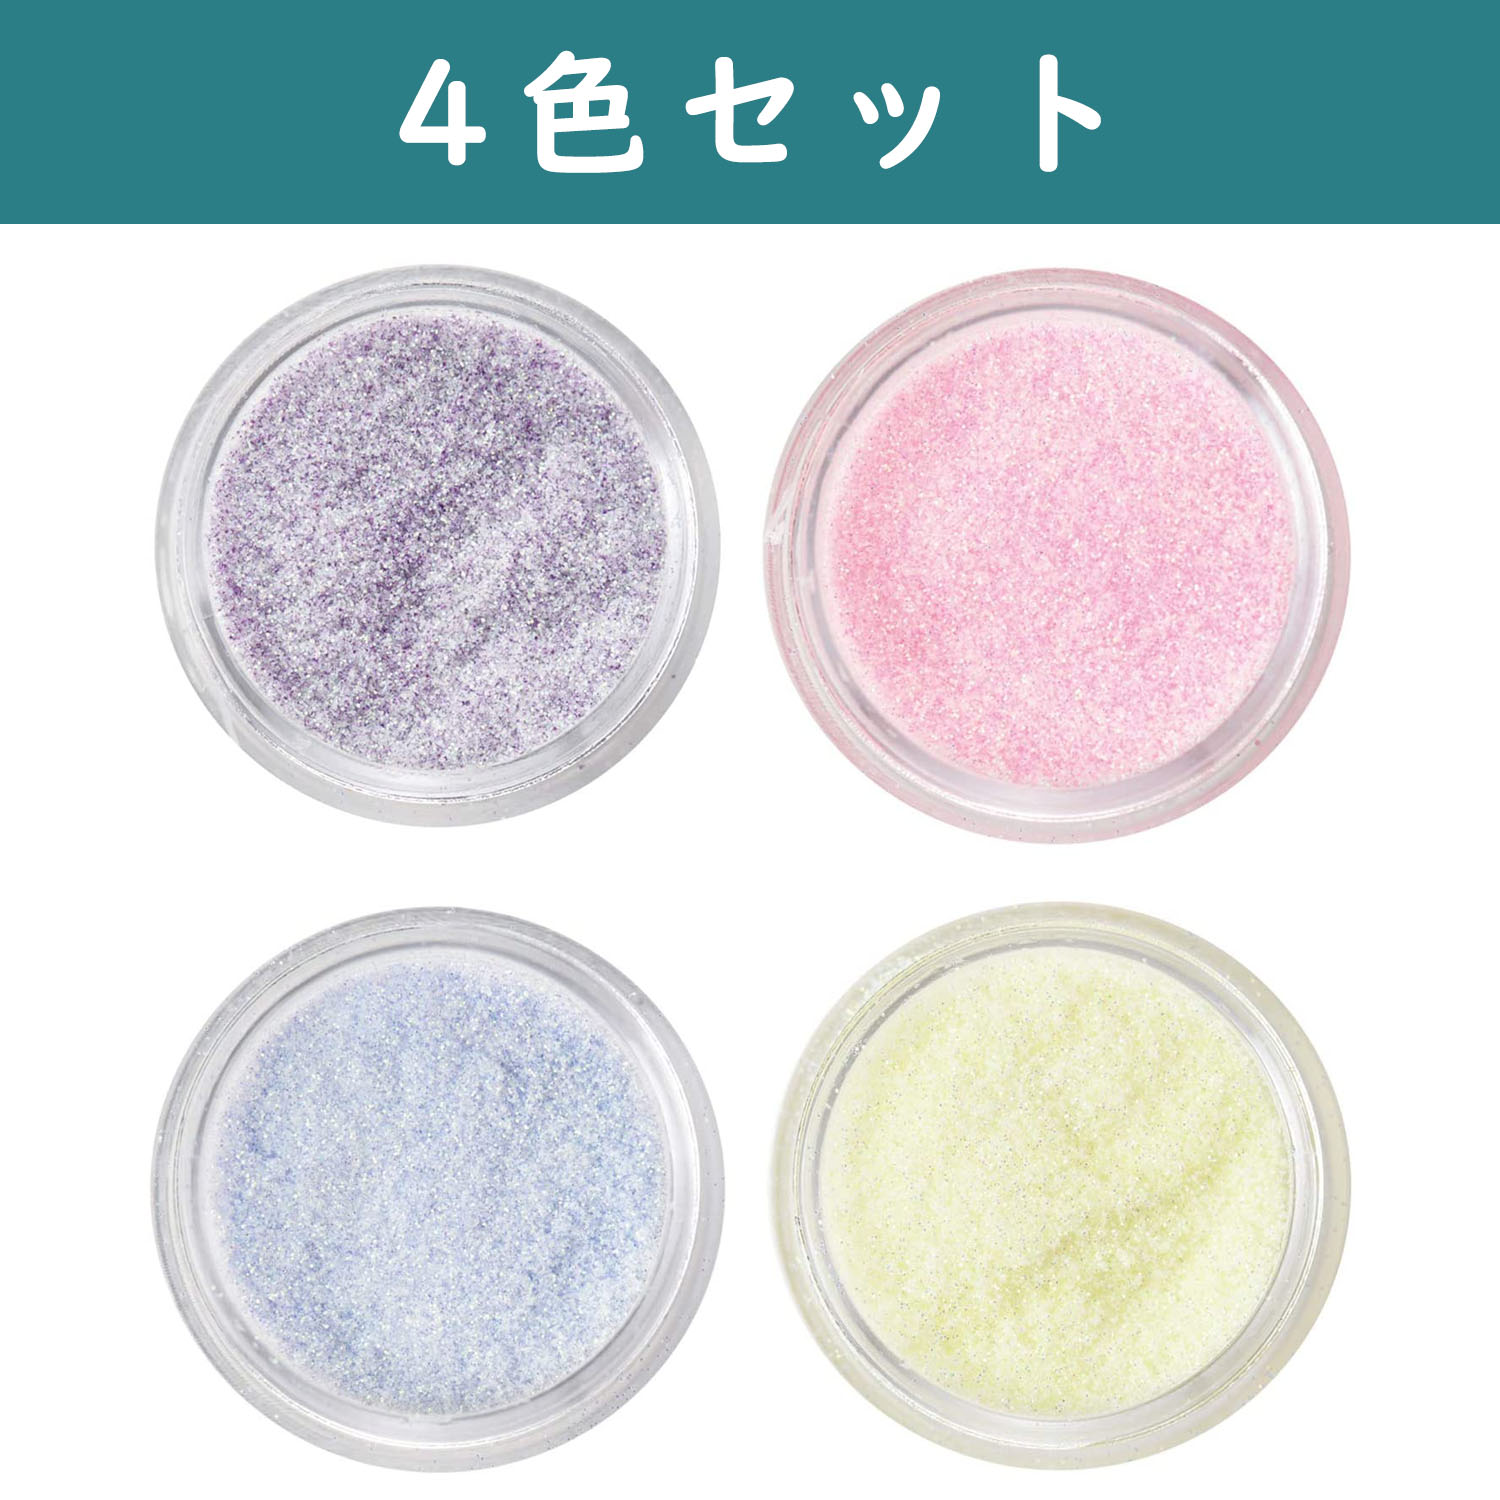 T10-H Sugar-like powder 4 colors set approx.0.4g/1pc (set)